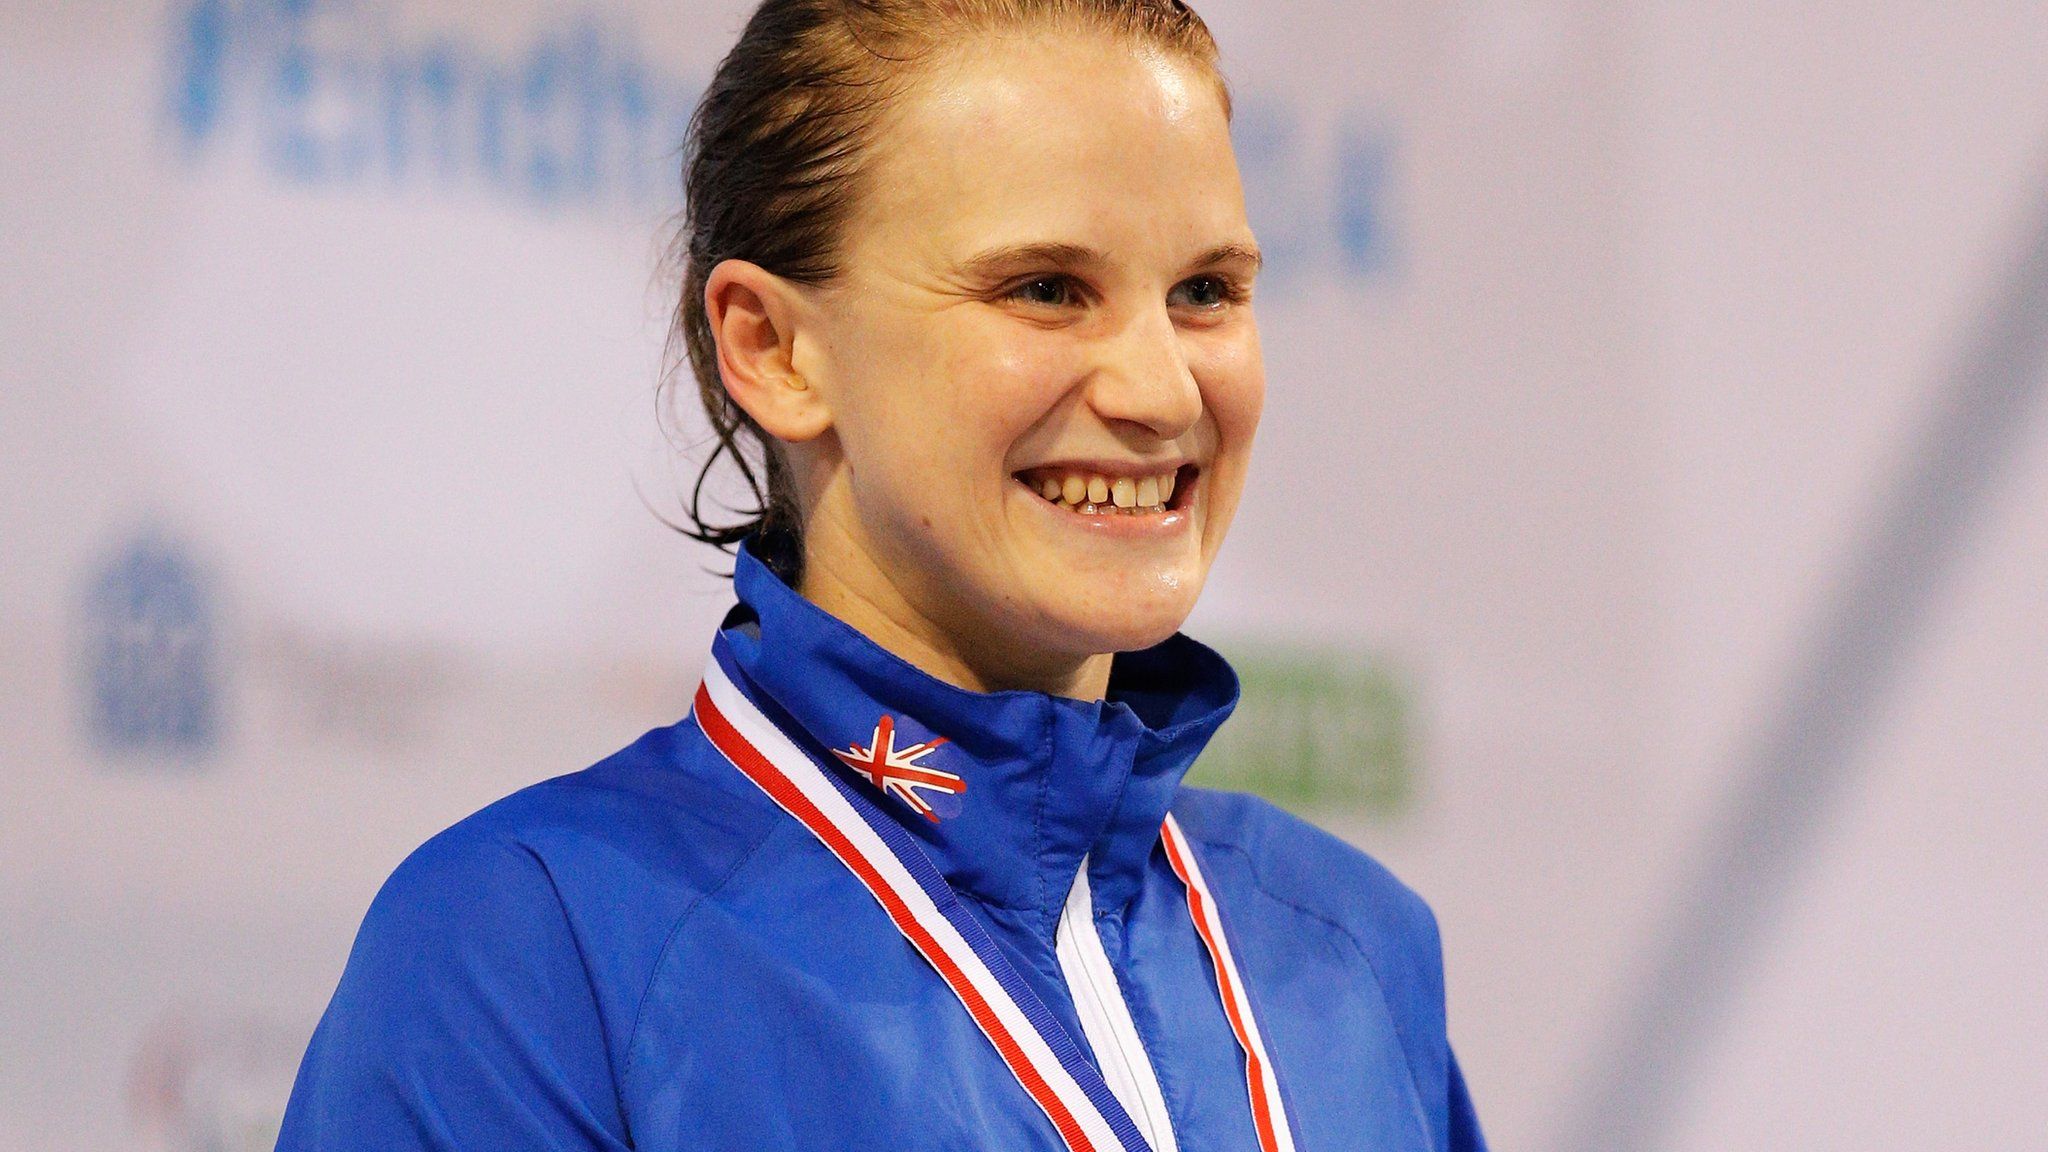 Para-swimmer Stephanie Slater